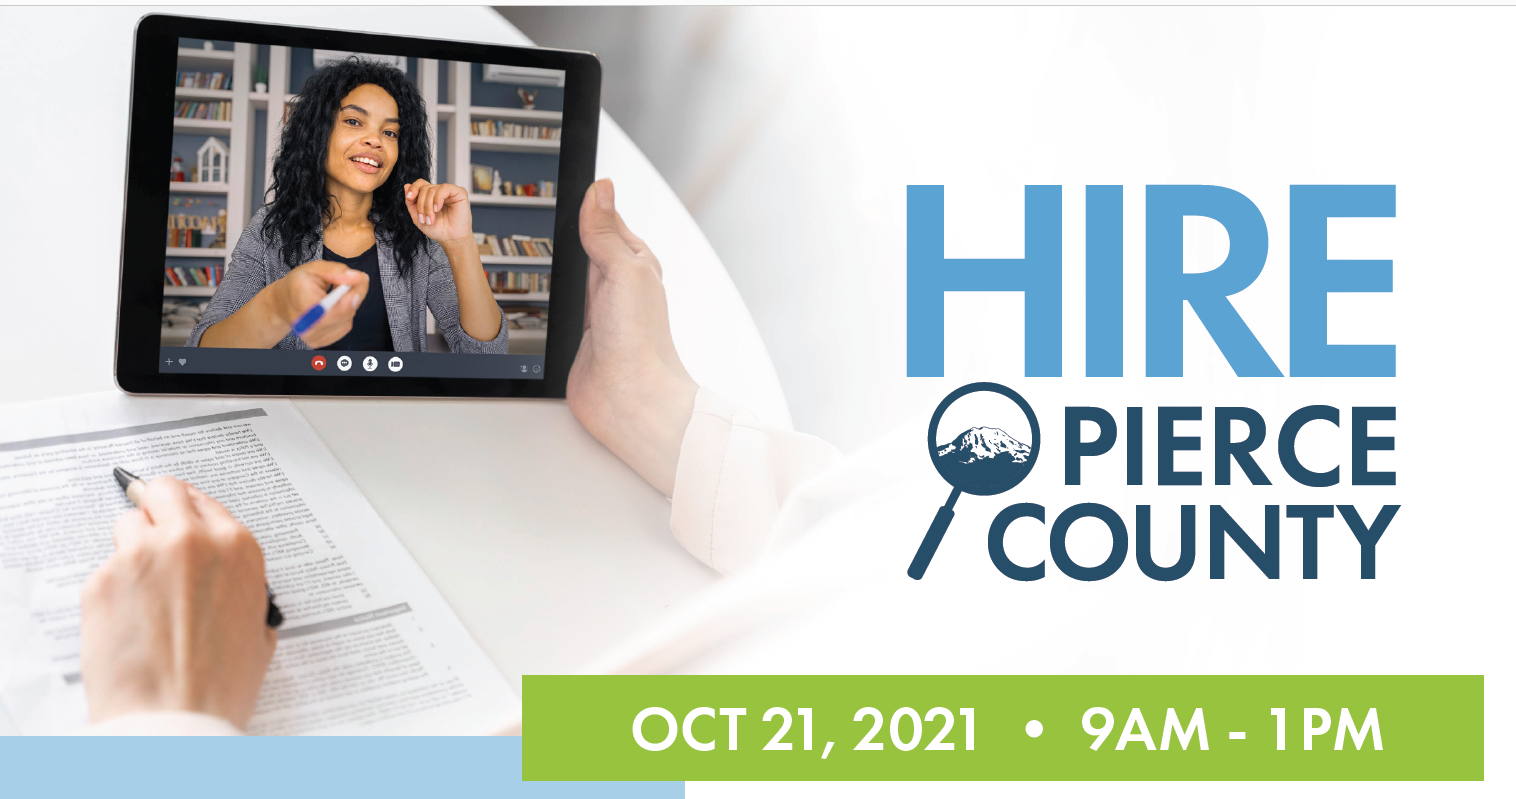 Hire Pierce County Virtual Job Fair - October 21st 1